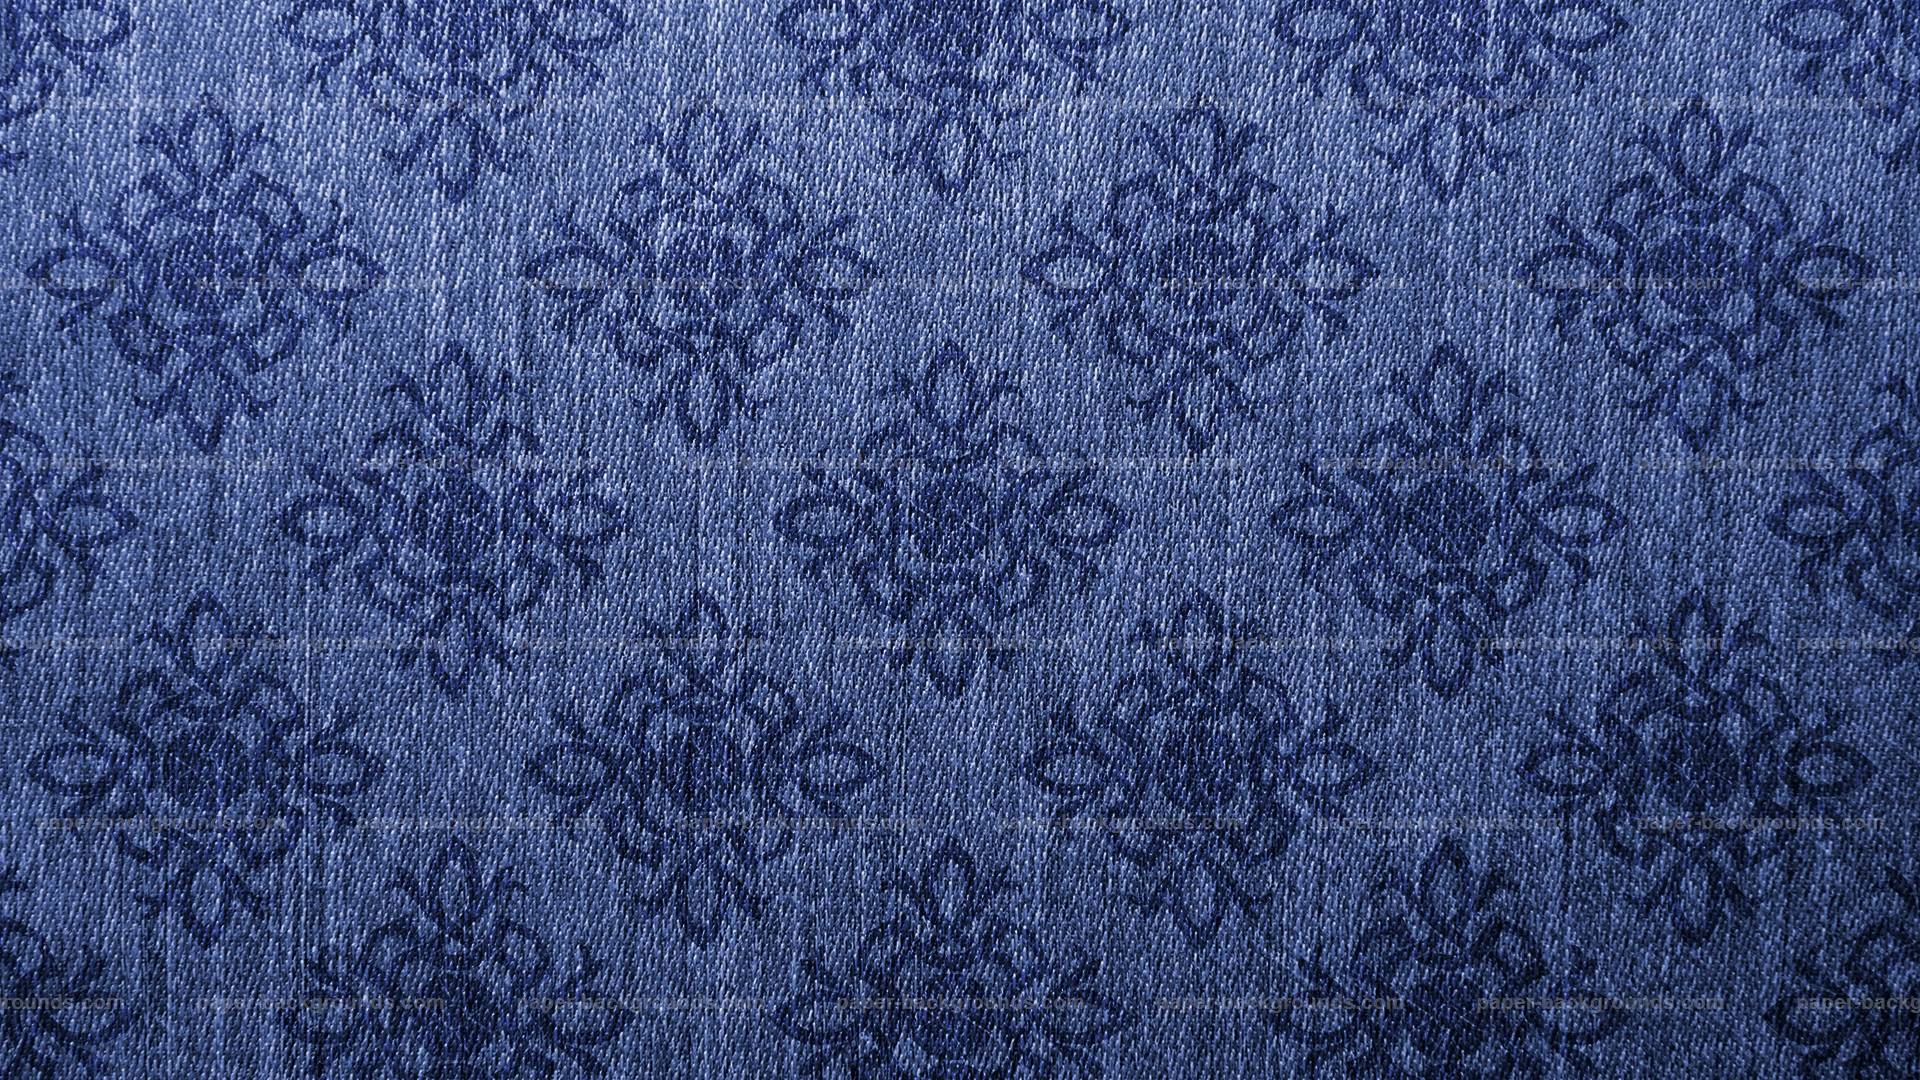 Blue Textured Background Wallpaper Image